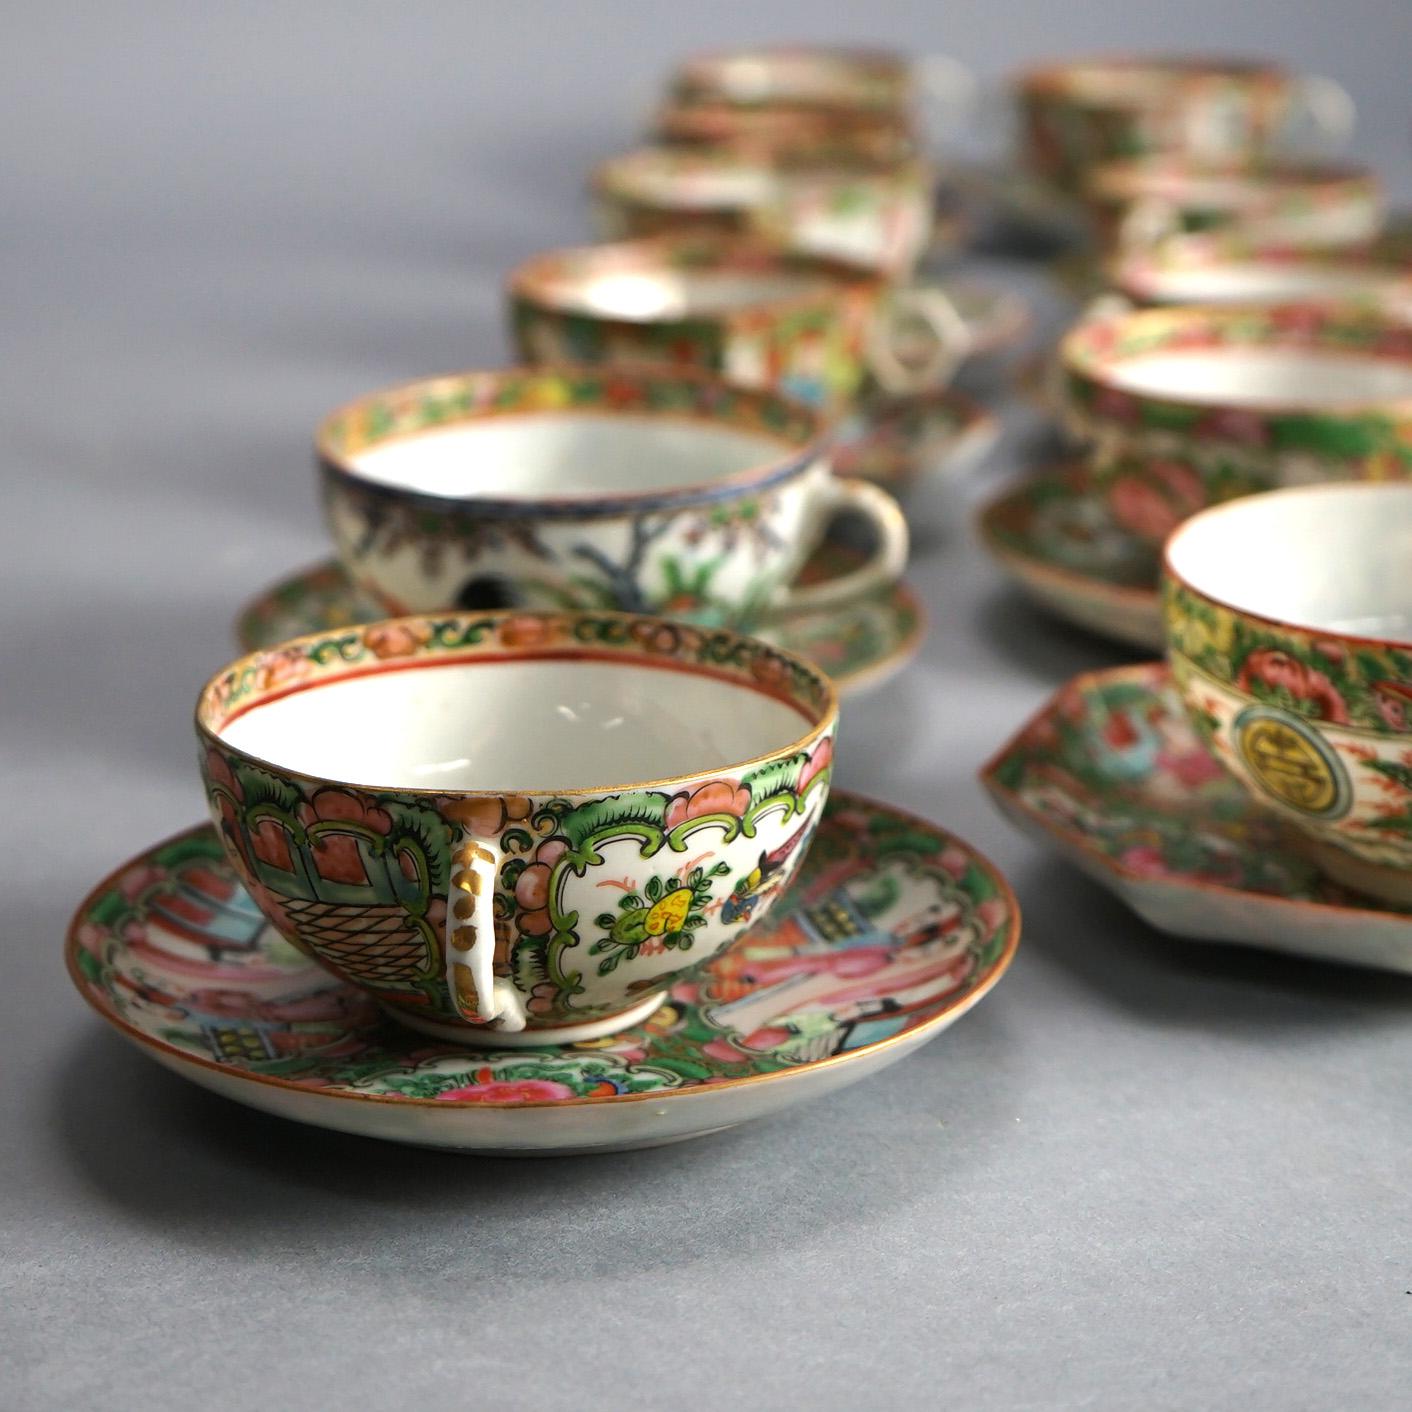 21 Antique Chinese Rose Medallion Porcelain Tea Cups & 20 Saucers C1900

Measures - 2